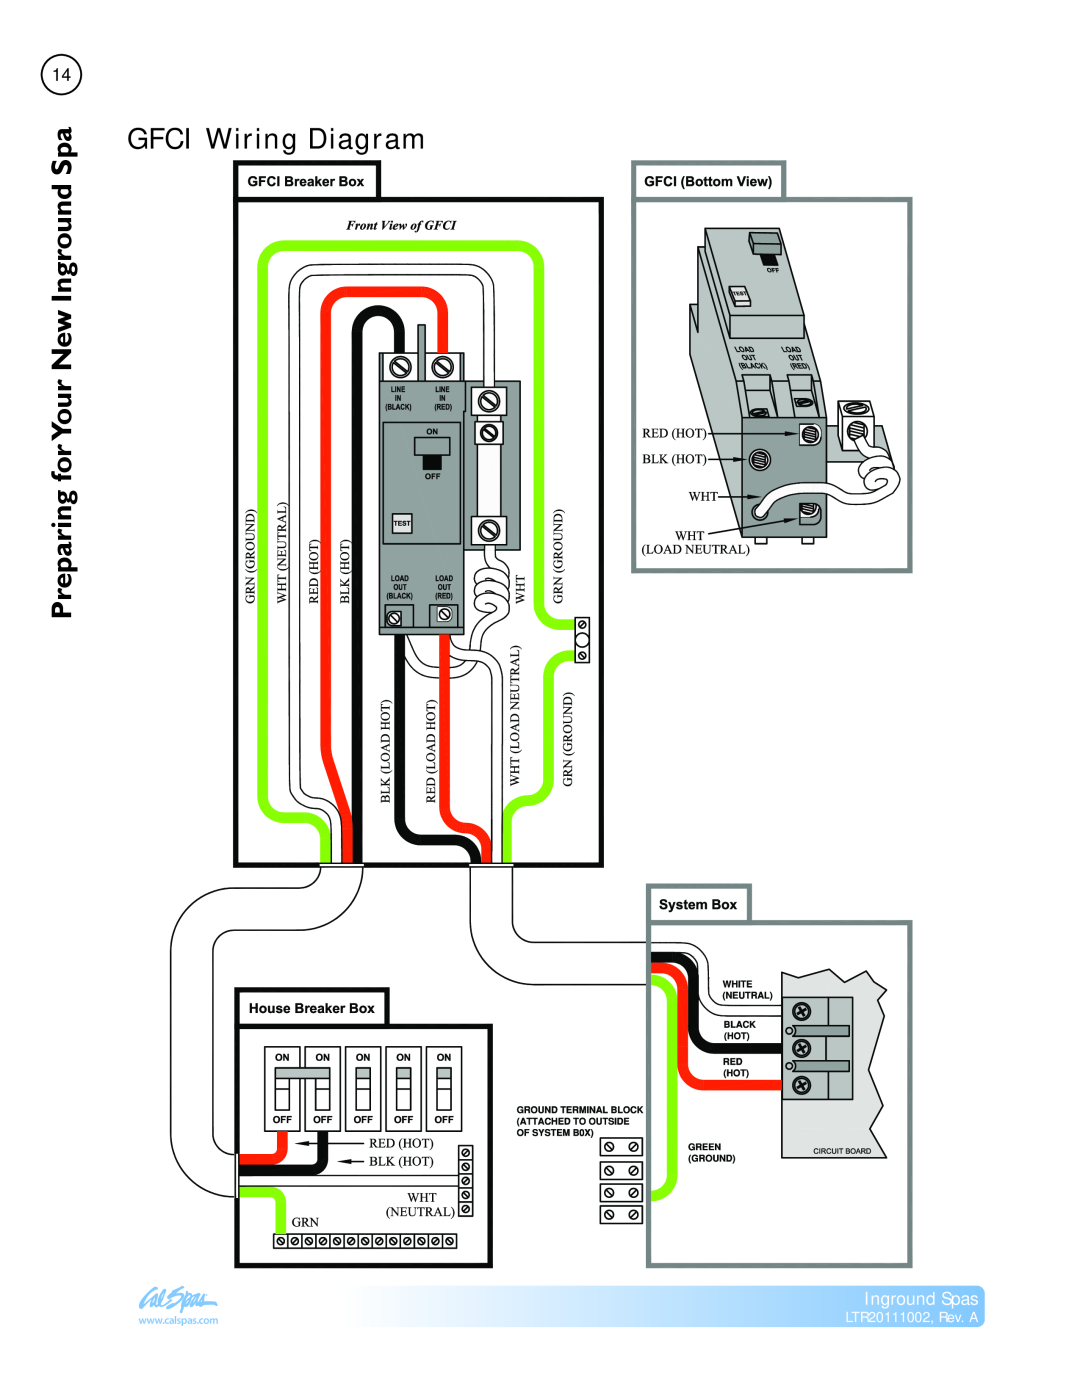 Cal Spas manual GFCI Wiring Diagram, Preparing forYour New Inground Spa, Inground Spas, LTR20111002, Rev. A 